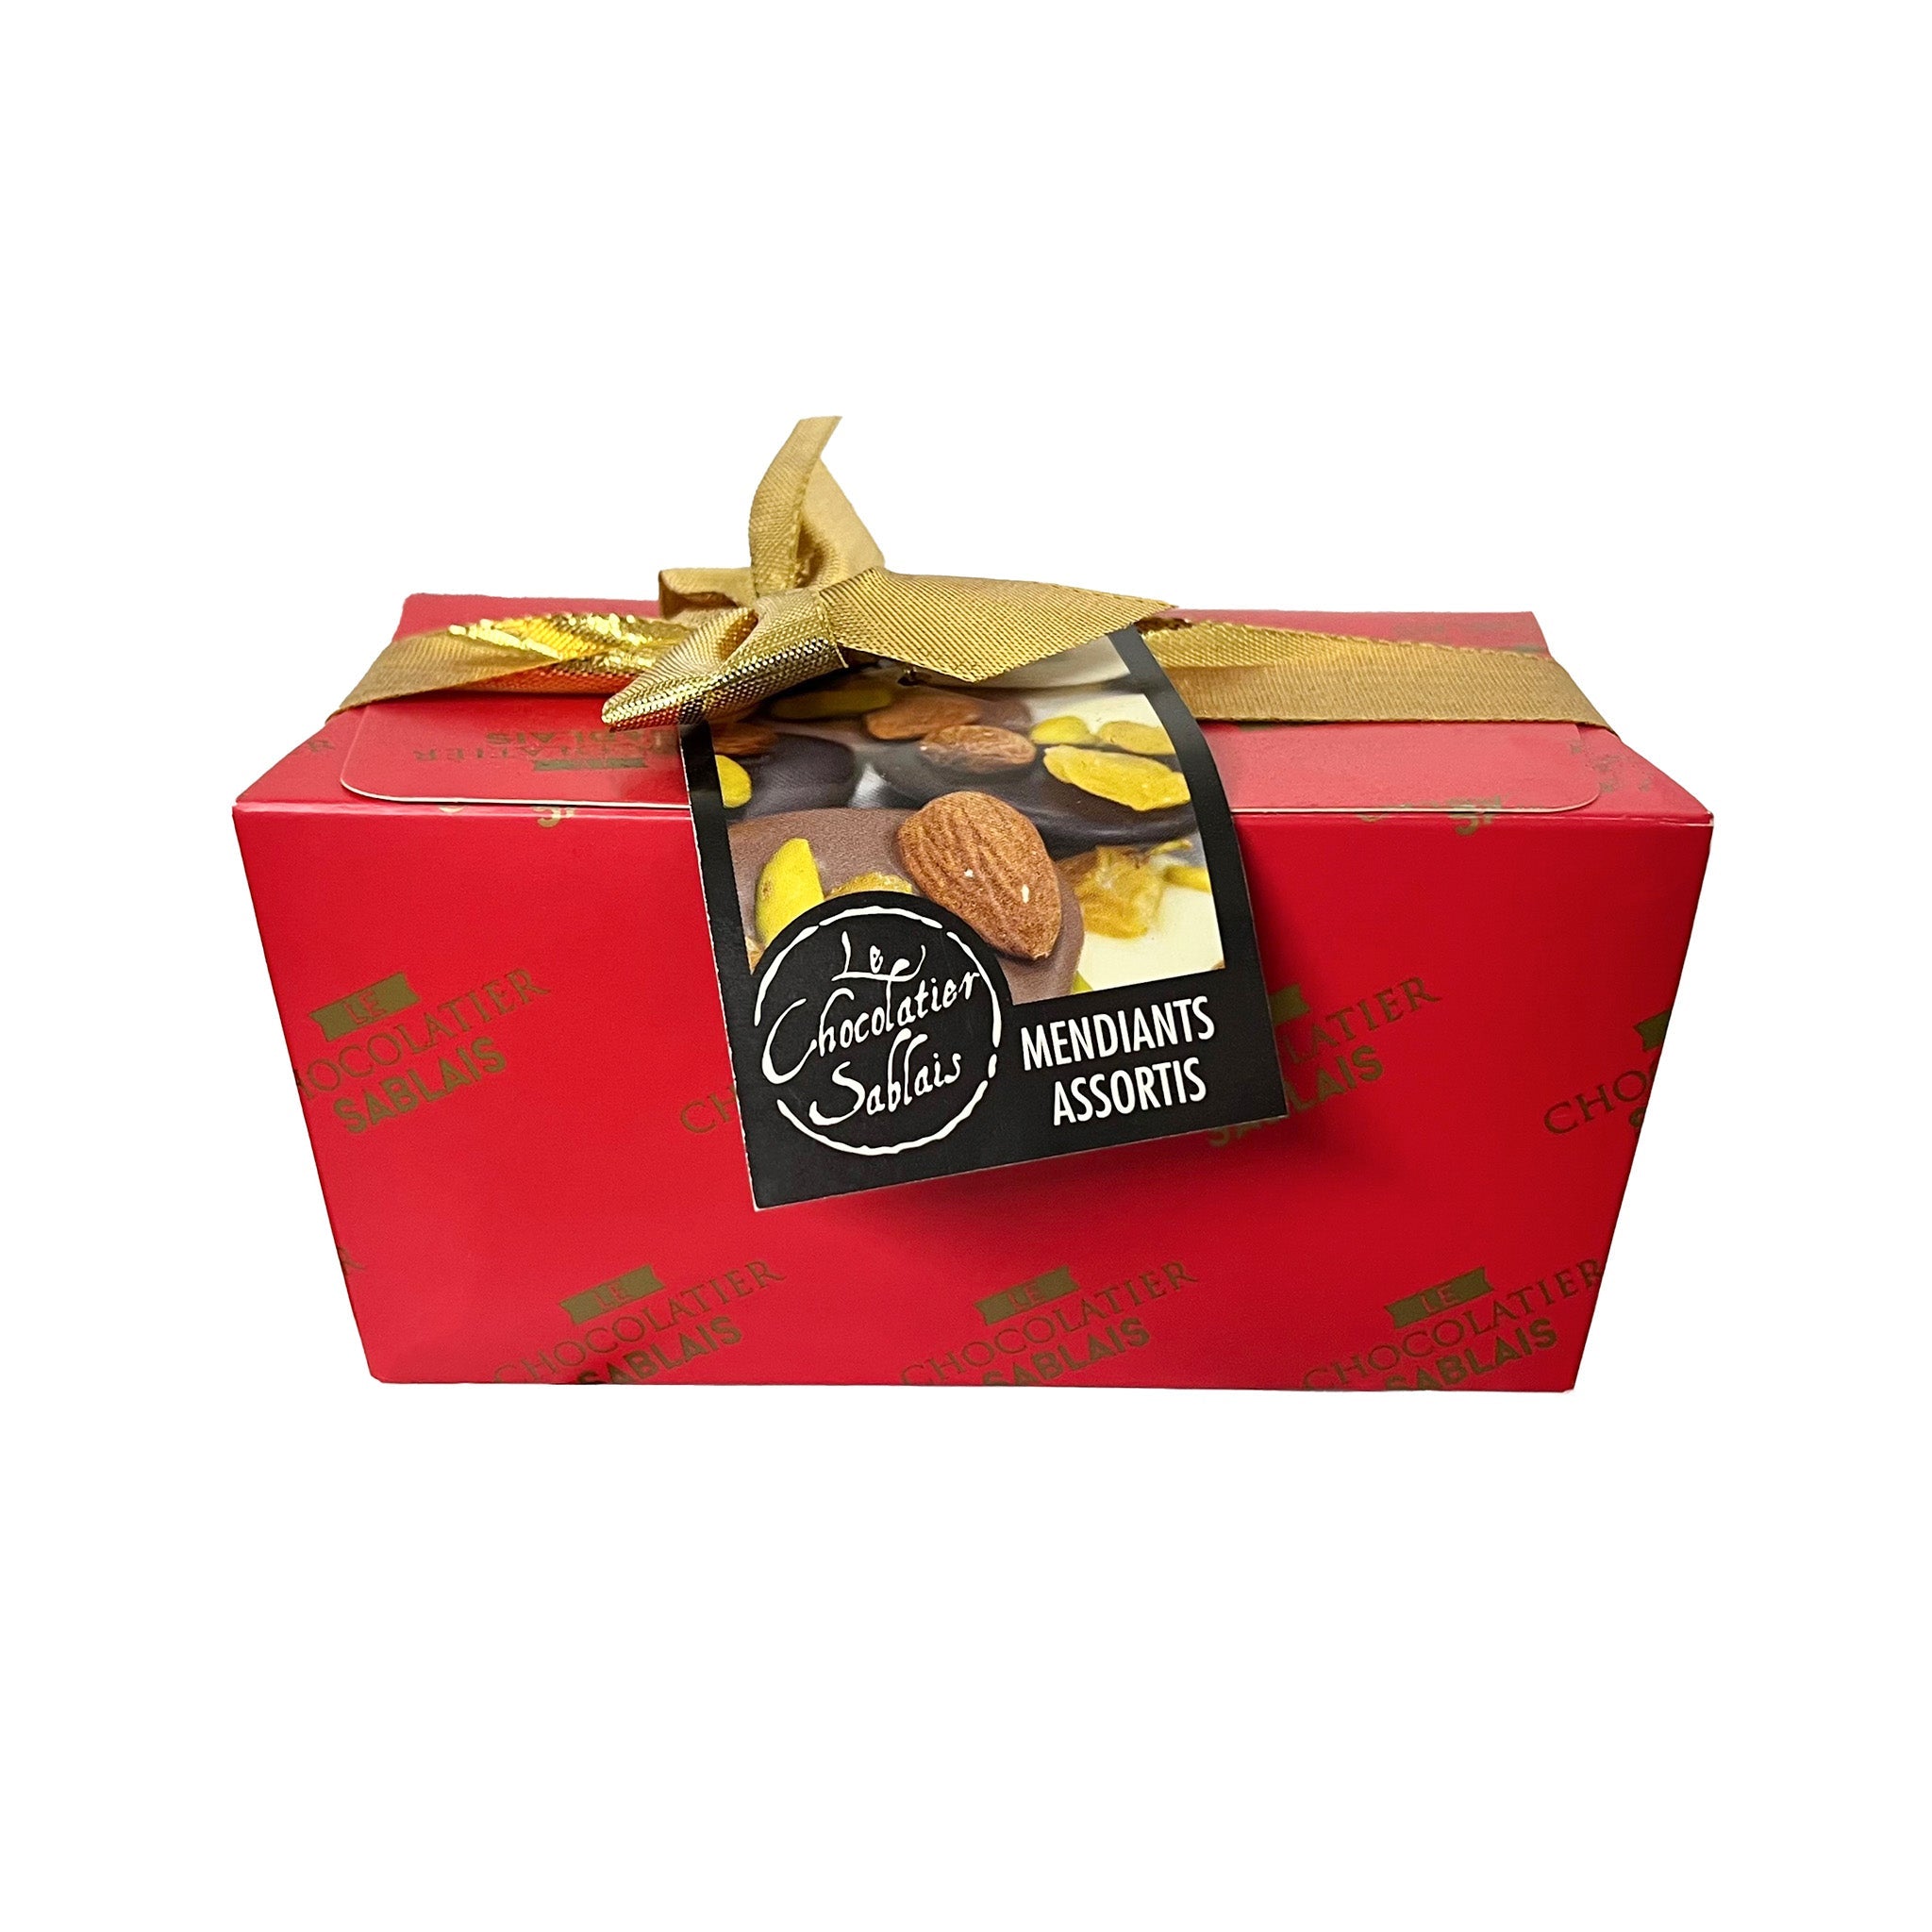 Chocolatier Sablais Chocolate Mendiants Assorted Giftbox